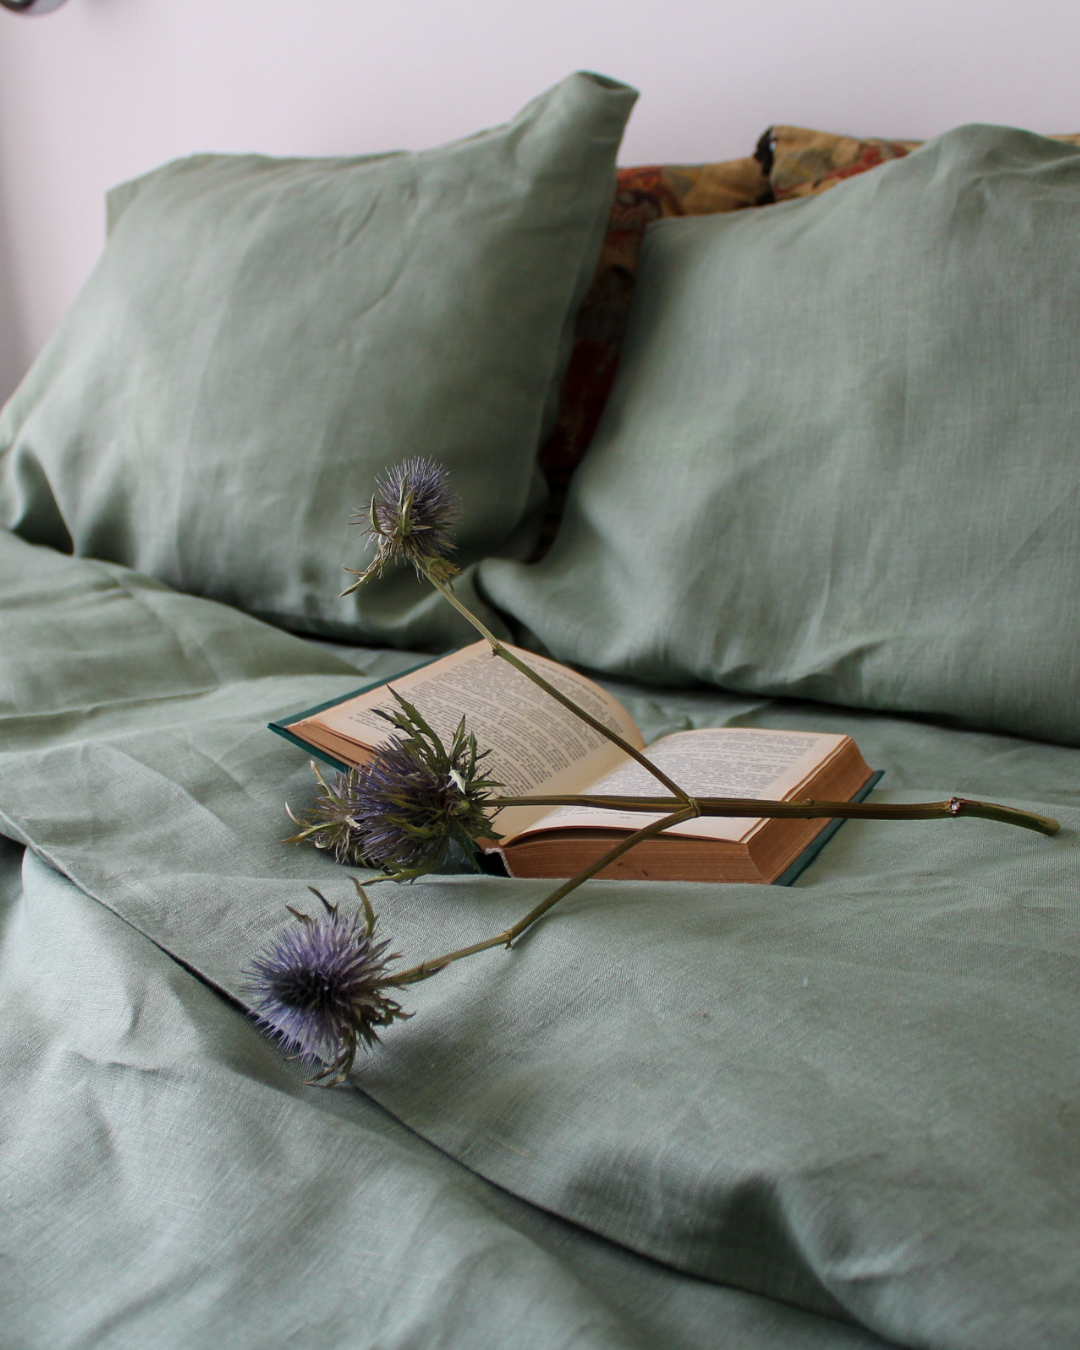 Olive bedding set from soft linen